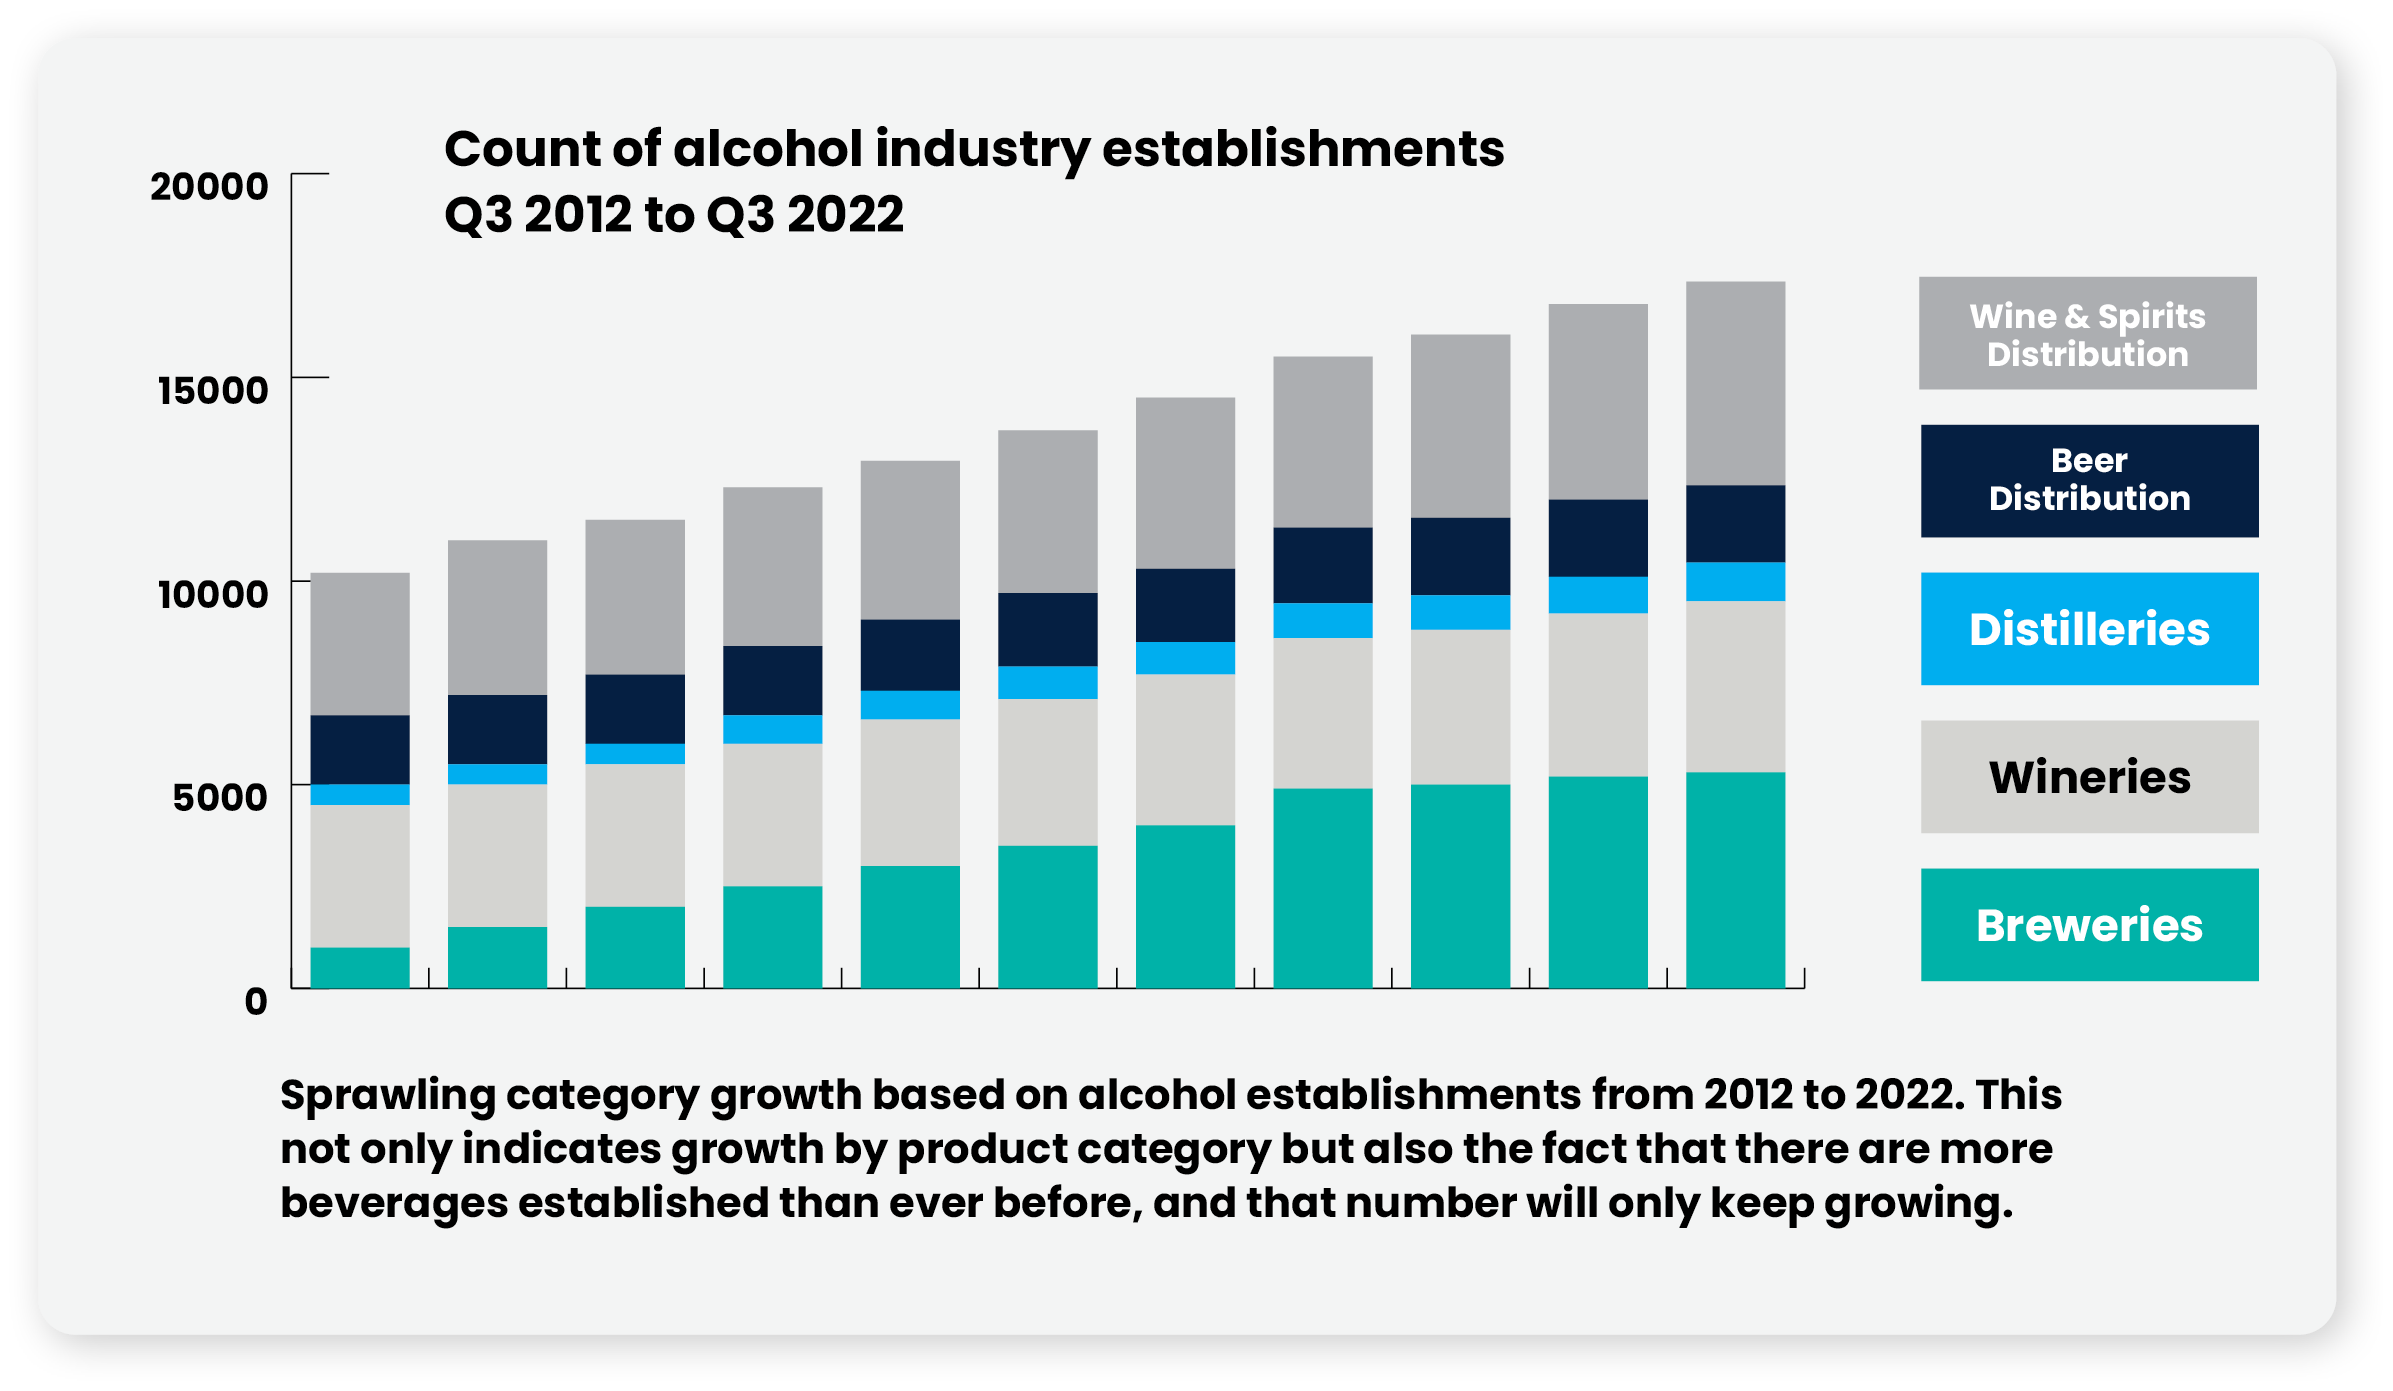 Count of alchohol industry establishments graphic